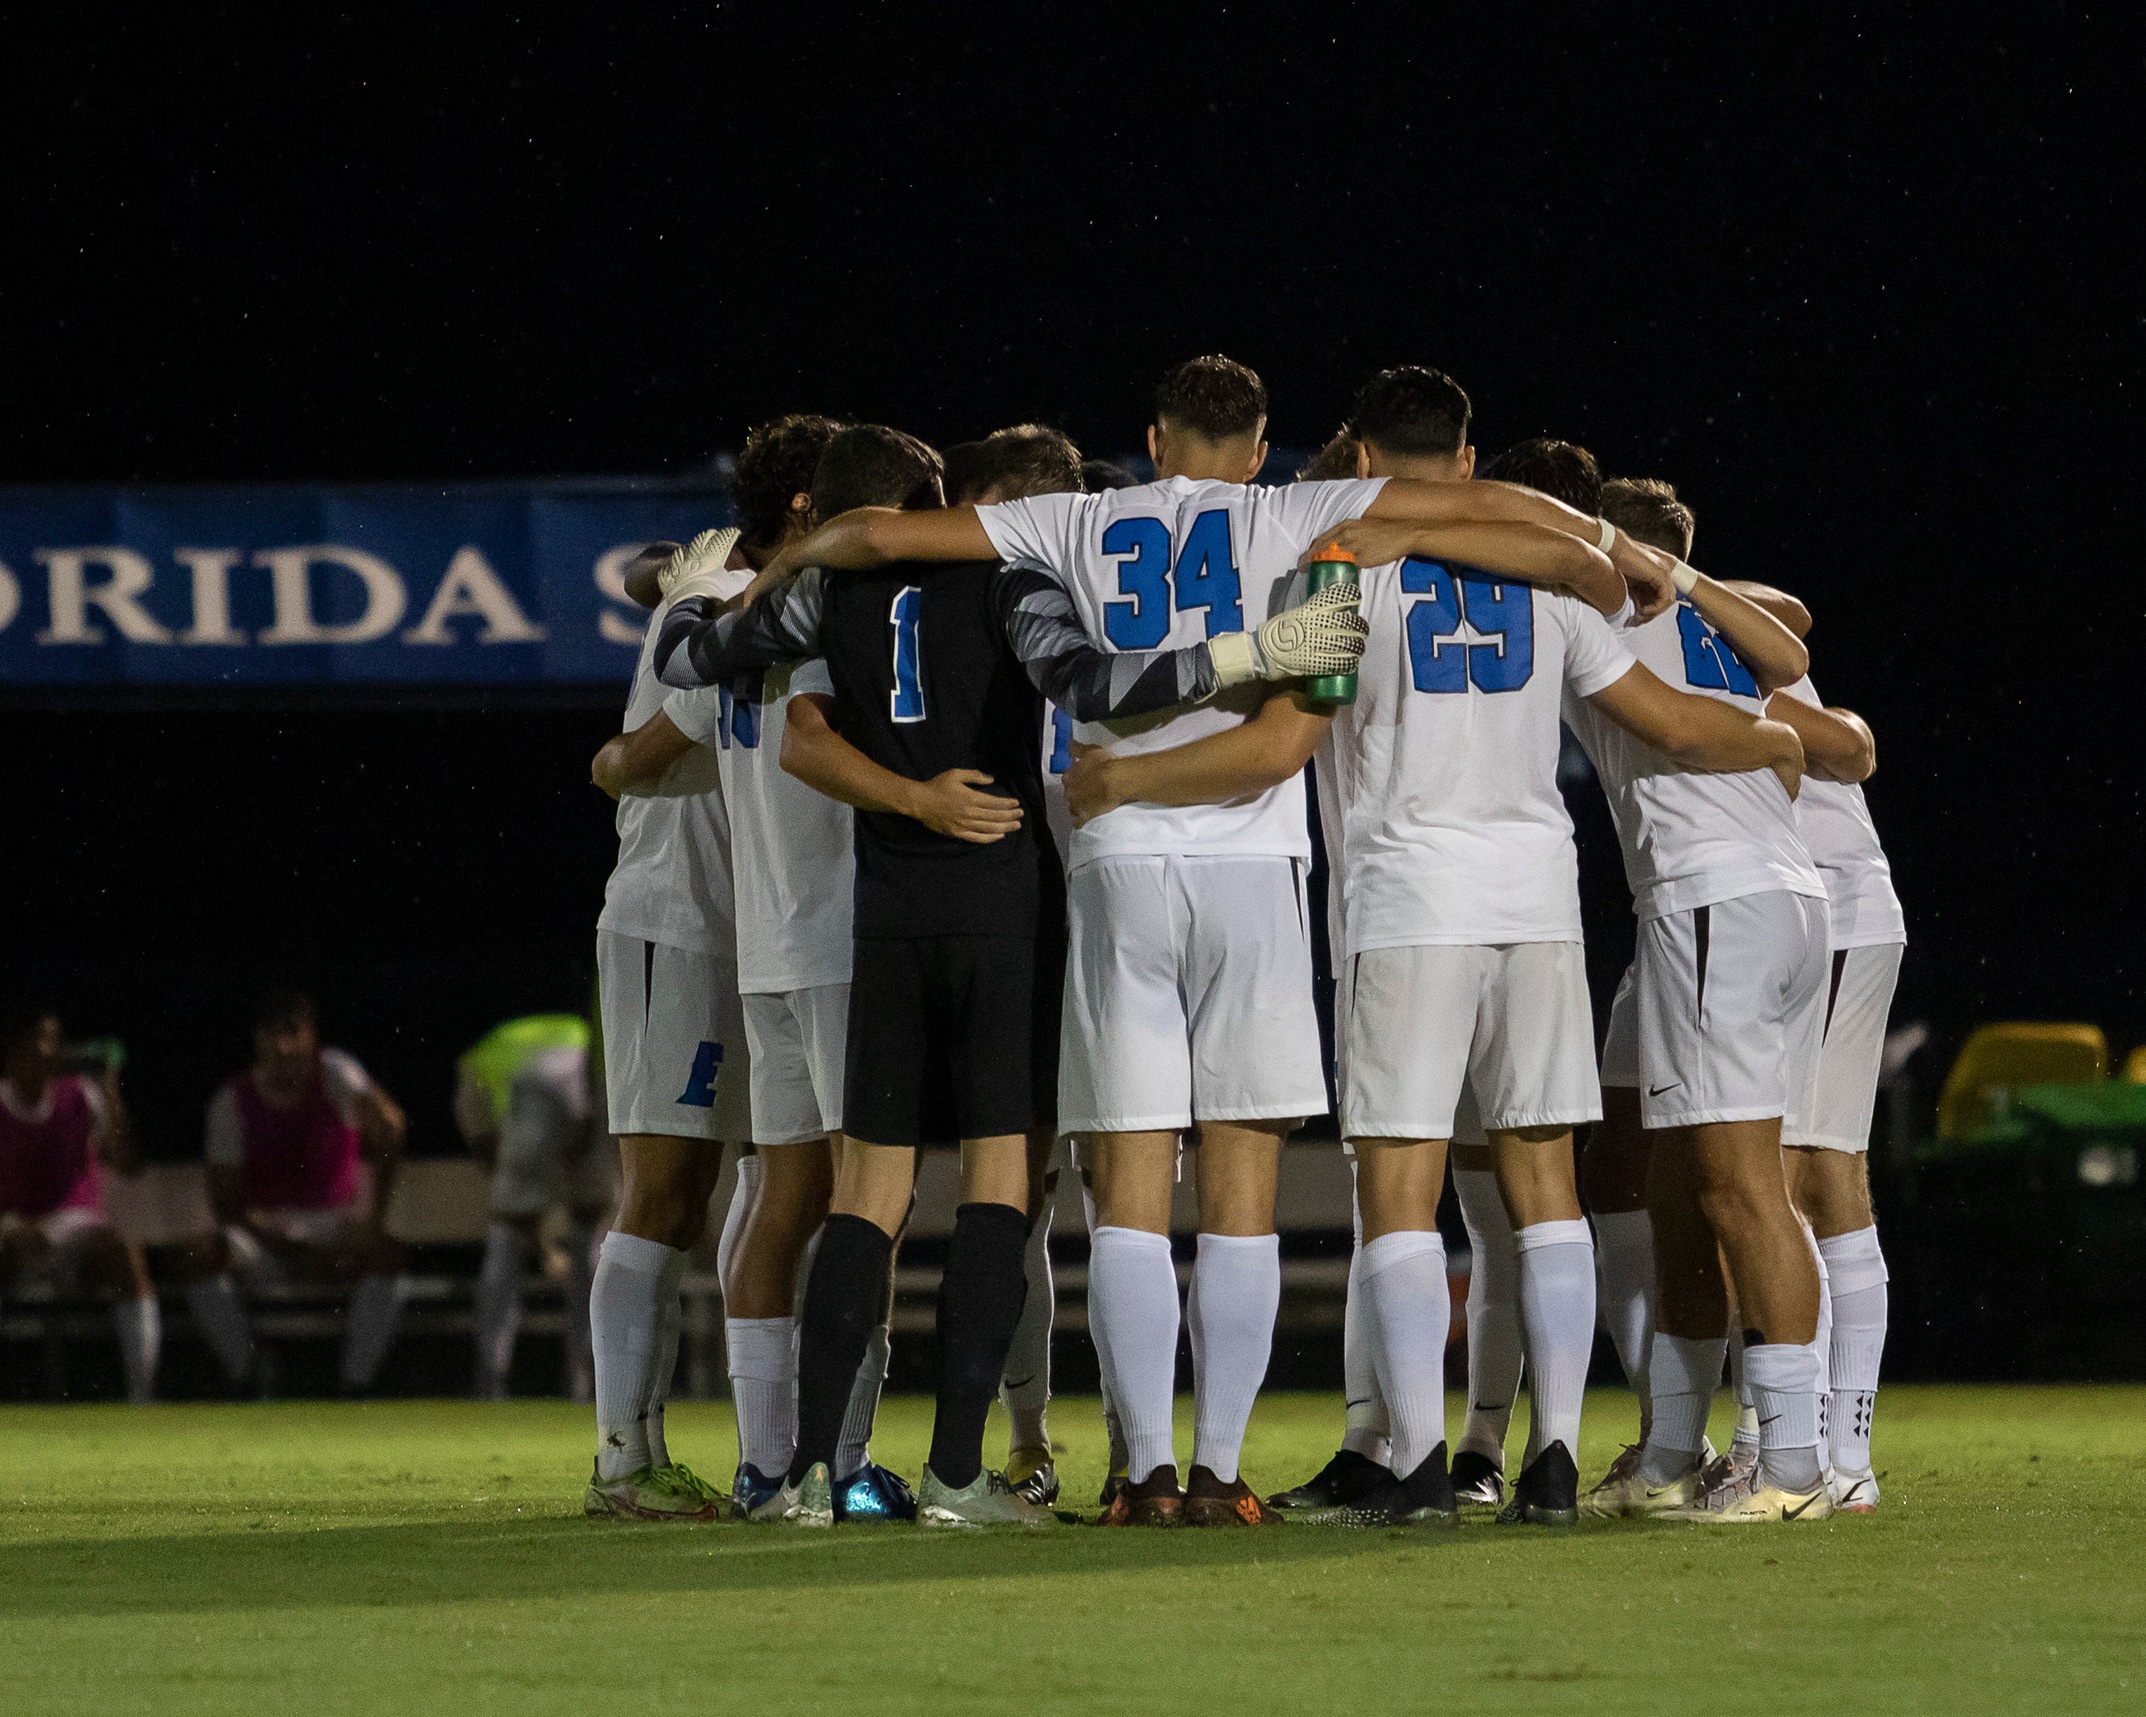 Men's soccer team opens conference season Saturday at Daytona State